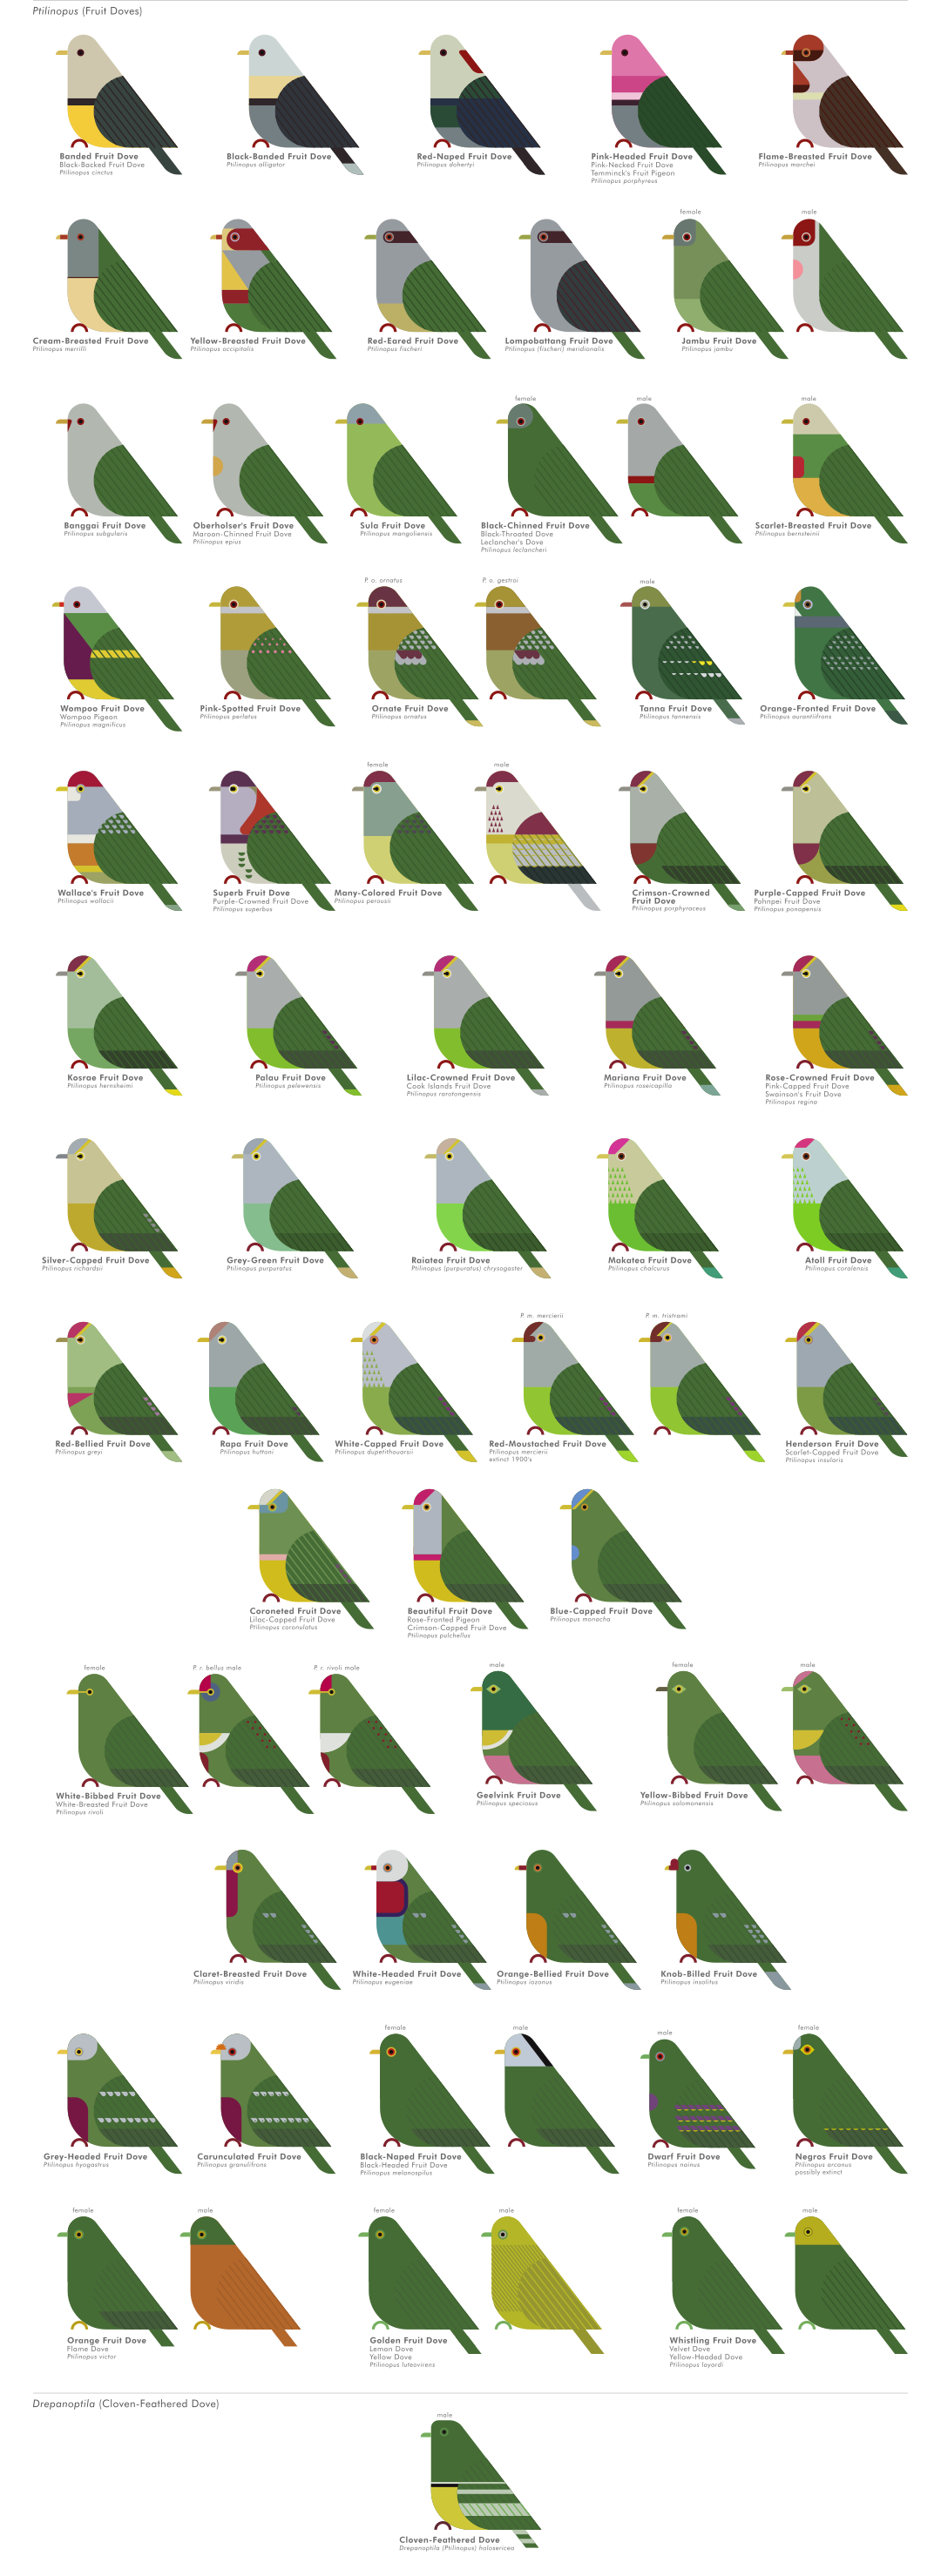 scott partridge - ave - avian vector encyclopedia - fruit doves Columbidae Columbiformes - vector bird art